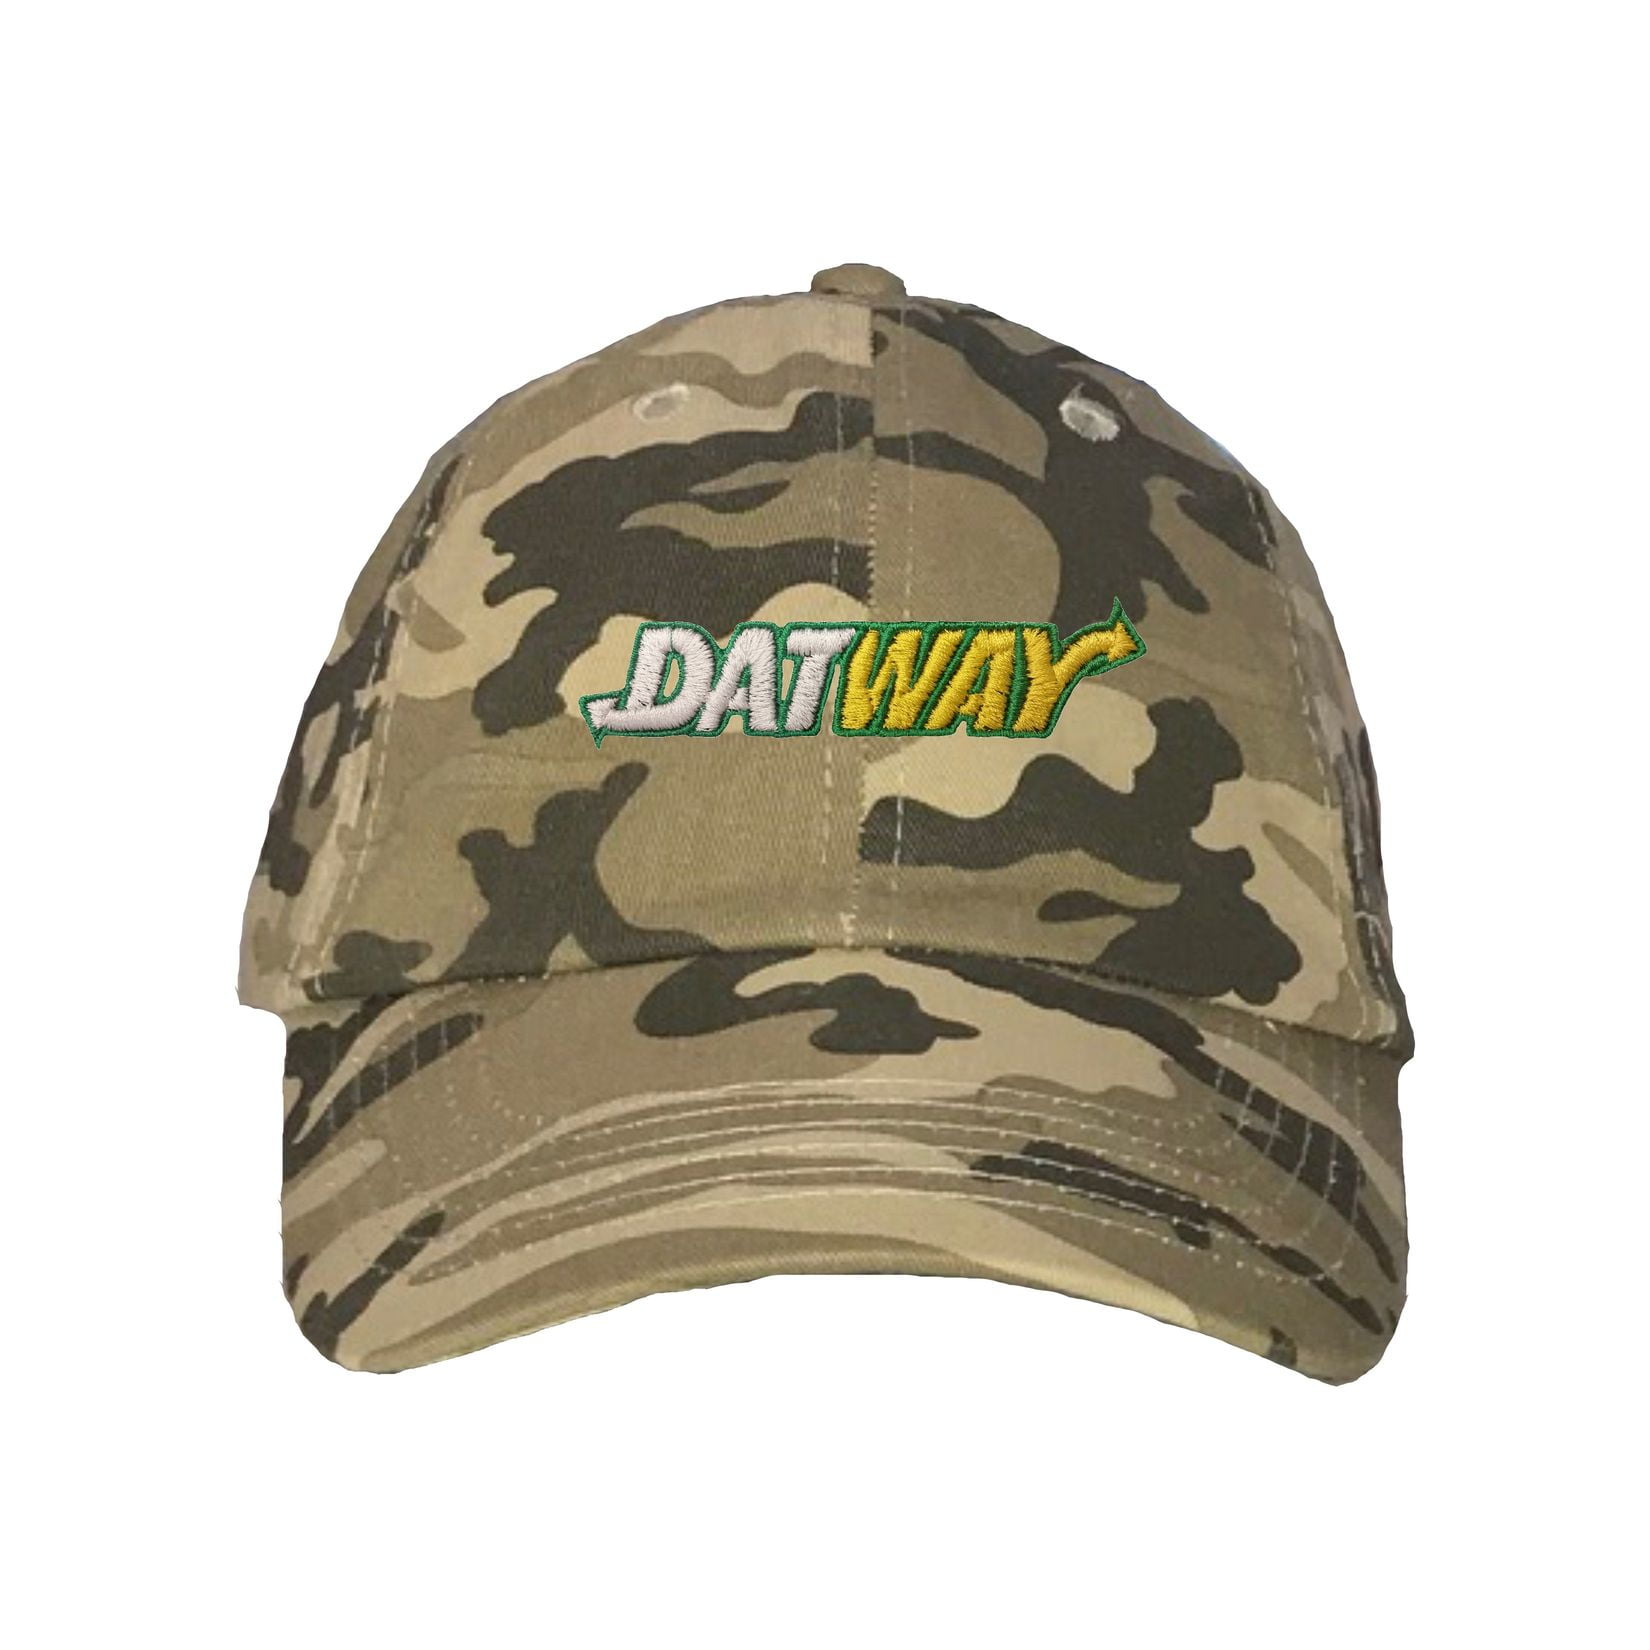 Adult Datway Embroidered Dad Hat - Walmart.com